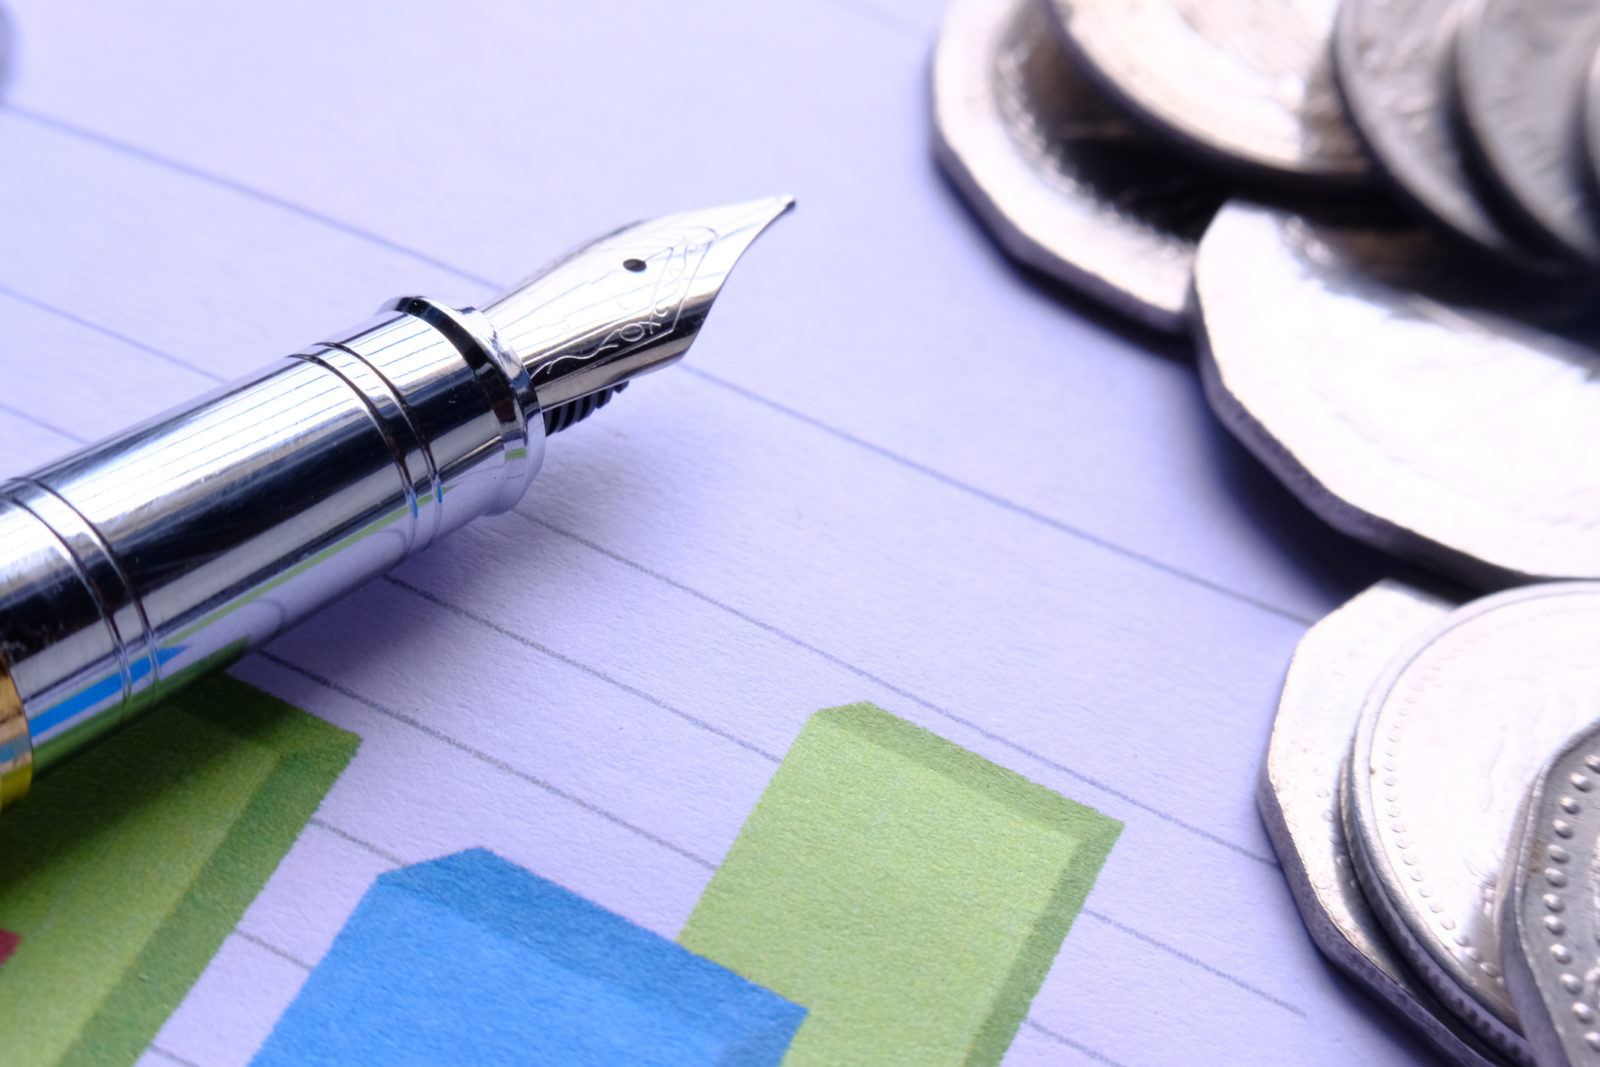 Saving stack coins money concept,graph,chart document and pen on desktop desk